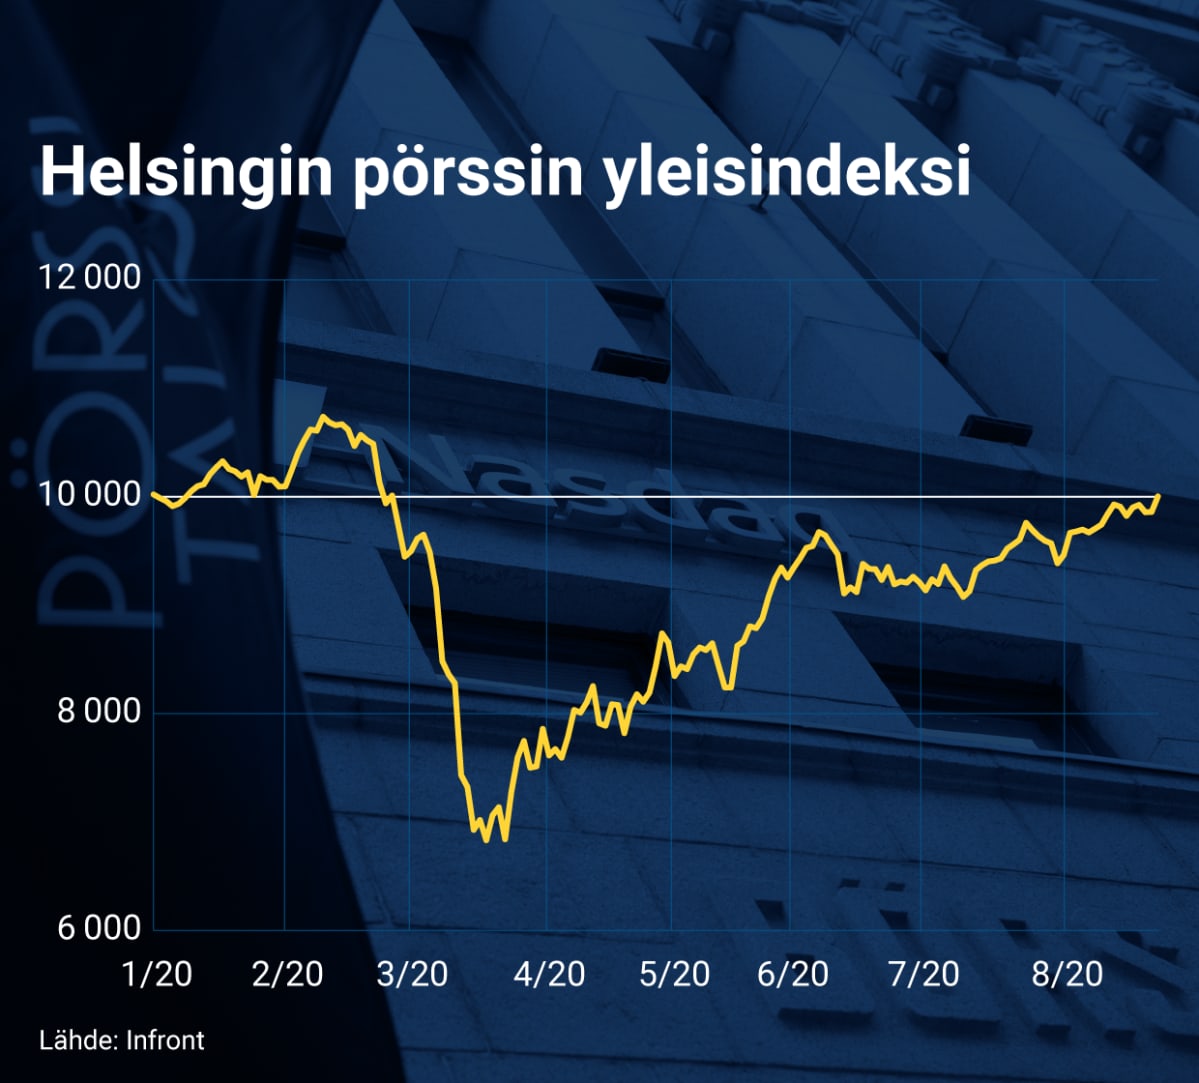 Helsingin pörssin yleisindeksi ylitti 10 000 rajan